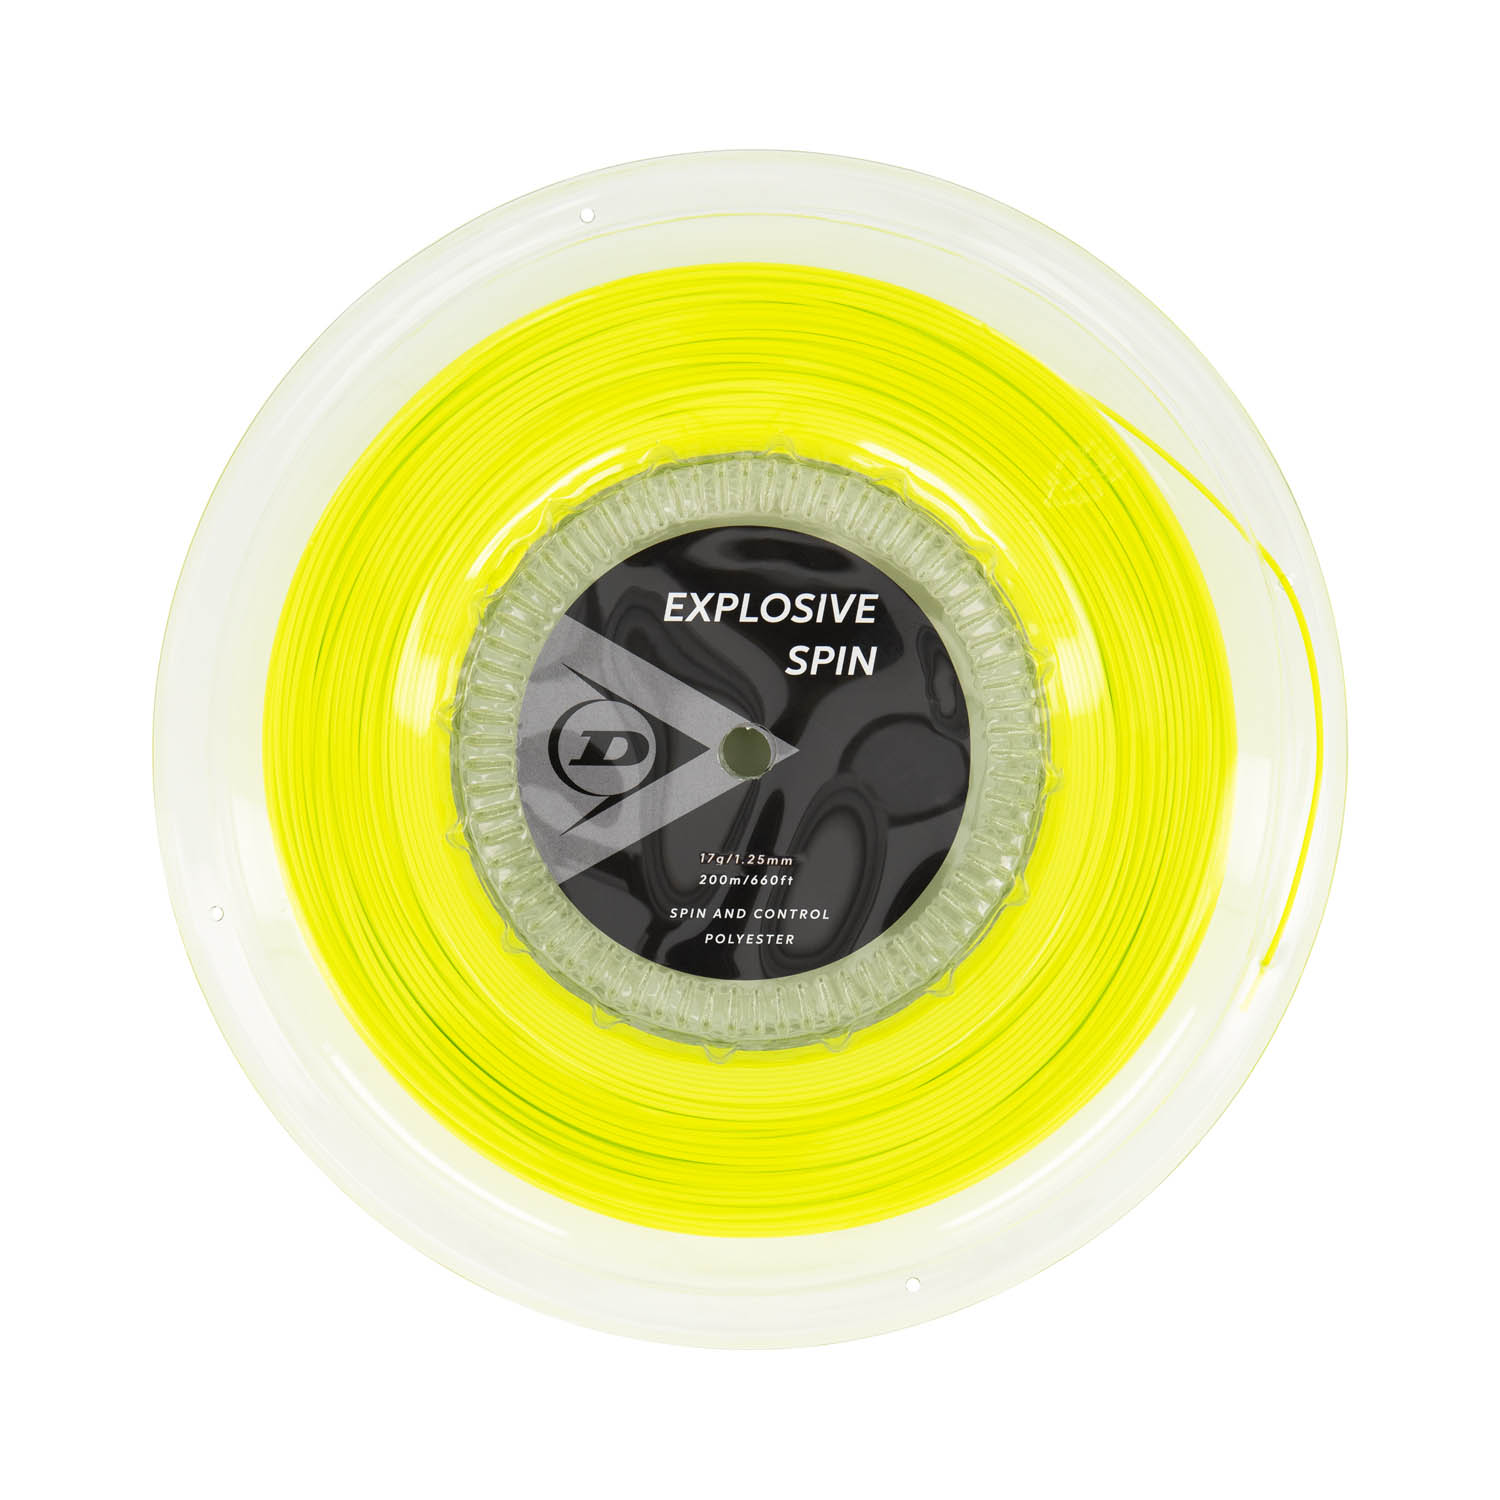 Dunlop Explosive Spin 1.25 200 m Reel - Yellow